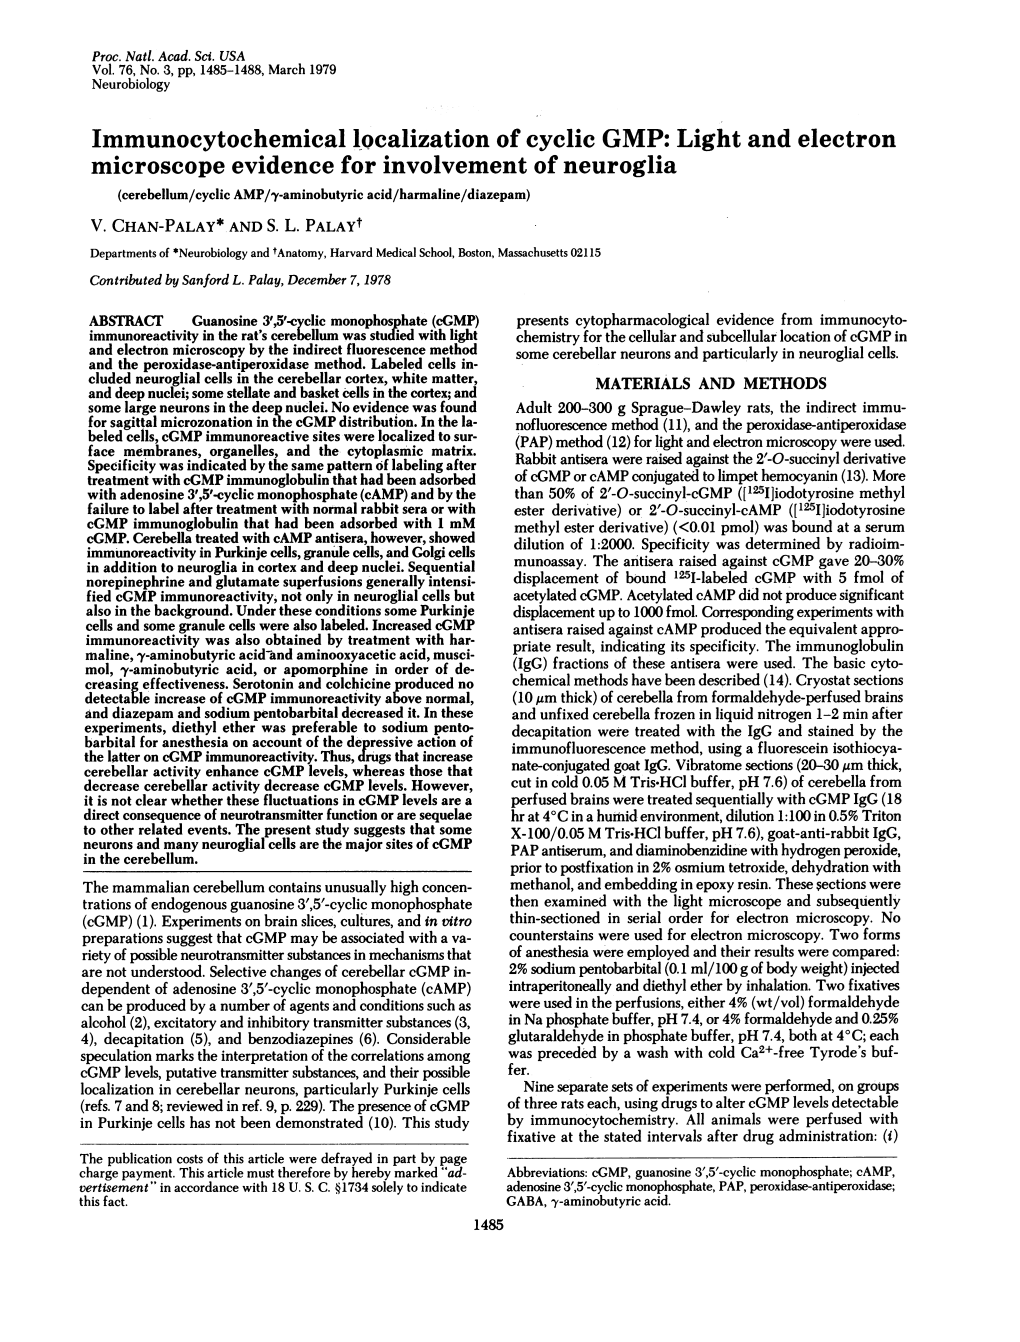 Light and Electron Microscope Evidence for Involvement of Neuroglia (Cerebellum/Cyclic AMP/Y-Aminobutyric Acid/Harmaline/Diazepam) V